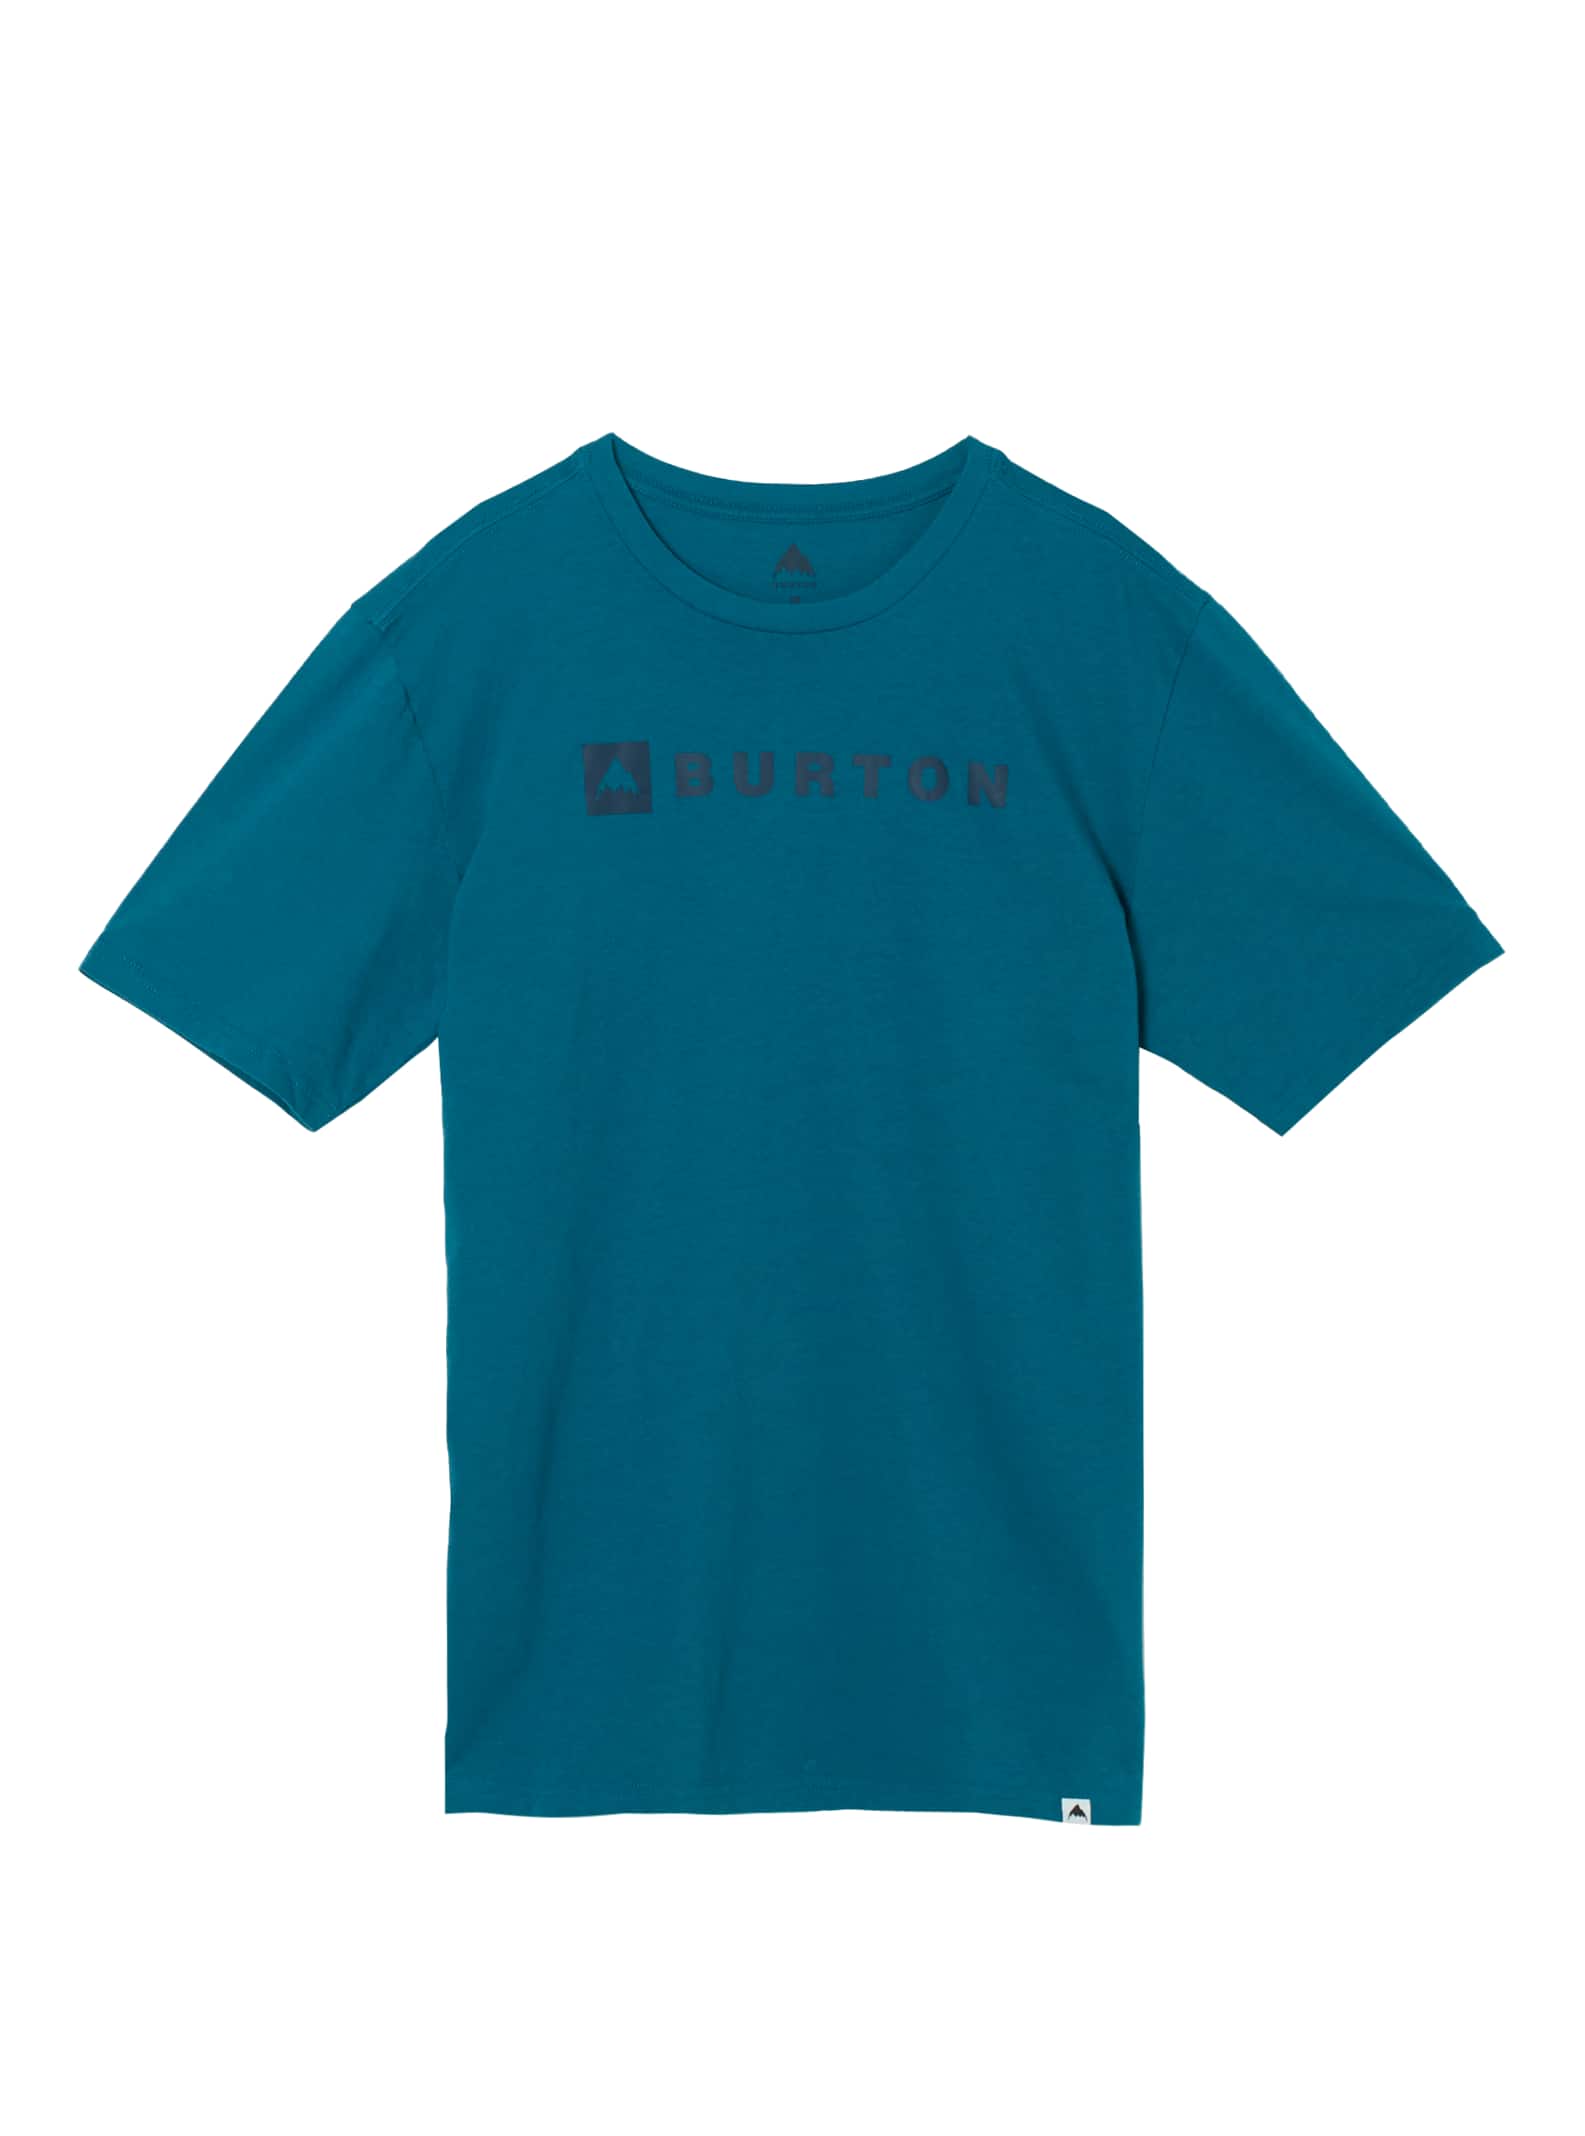 Burton Horizontal Mountain kortärmad t-shirt, Lyons Blue, S